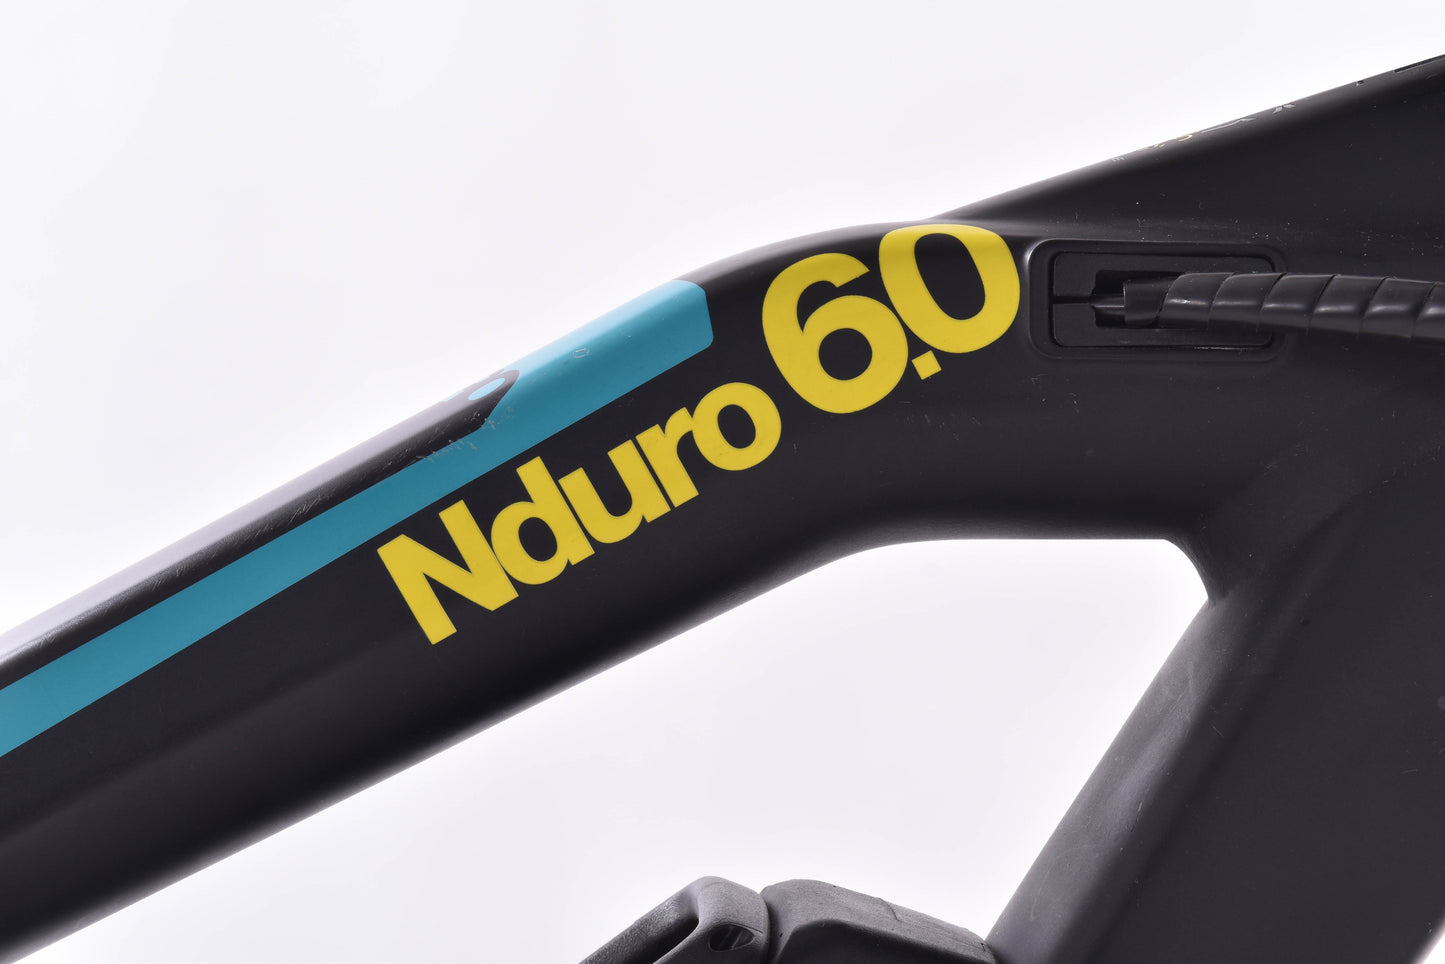 USED 2017 Haibike sDuro NDURO 6.0 Large Full Sus Electric Mountain Bike 27.5" Wheels Yamaha 500w Class 1 20mph